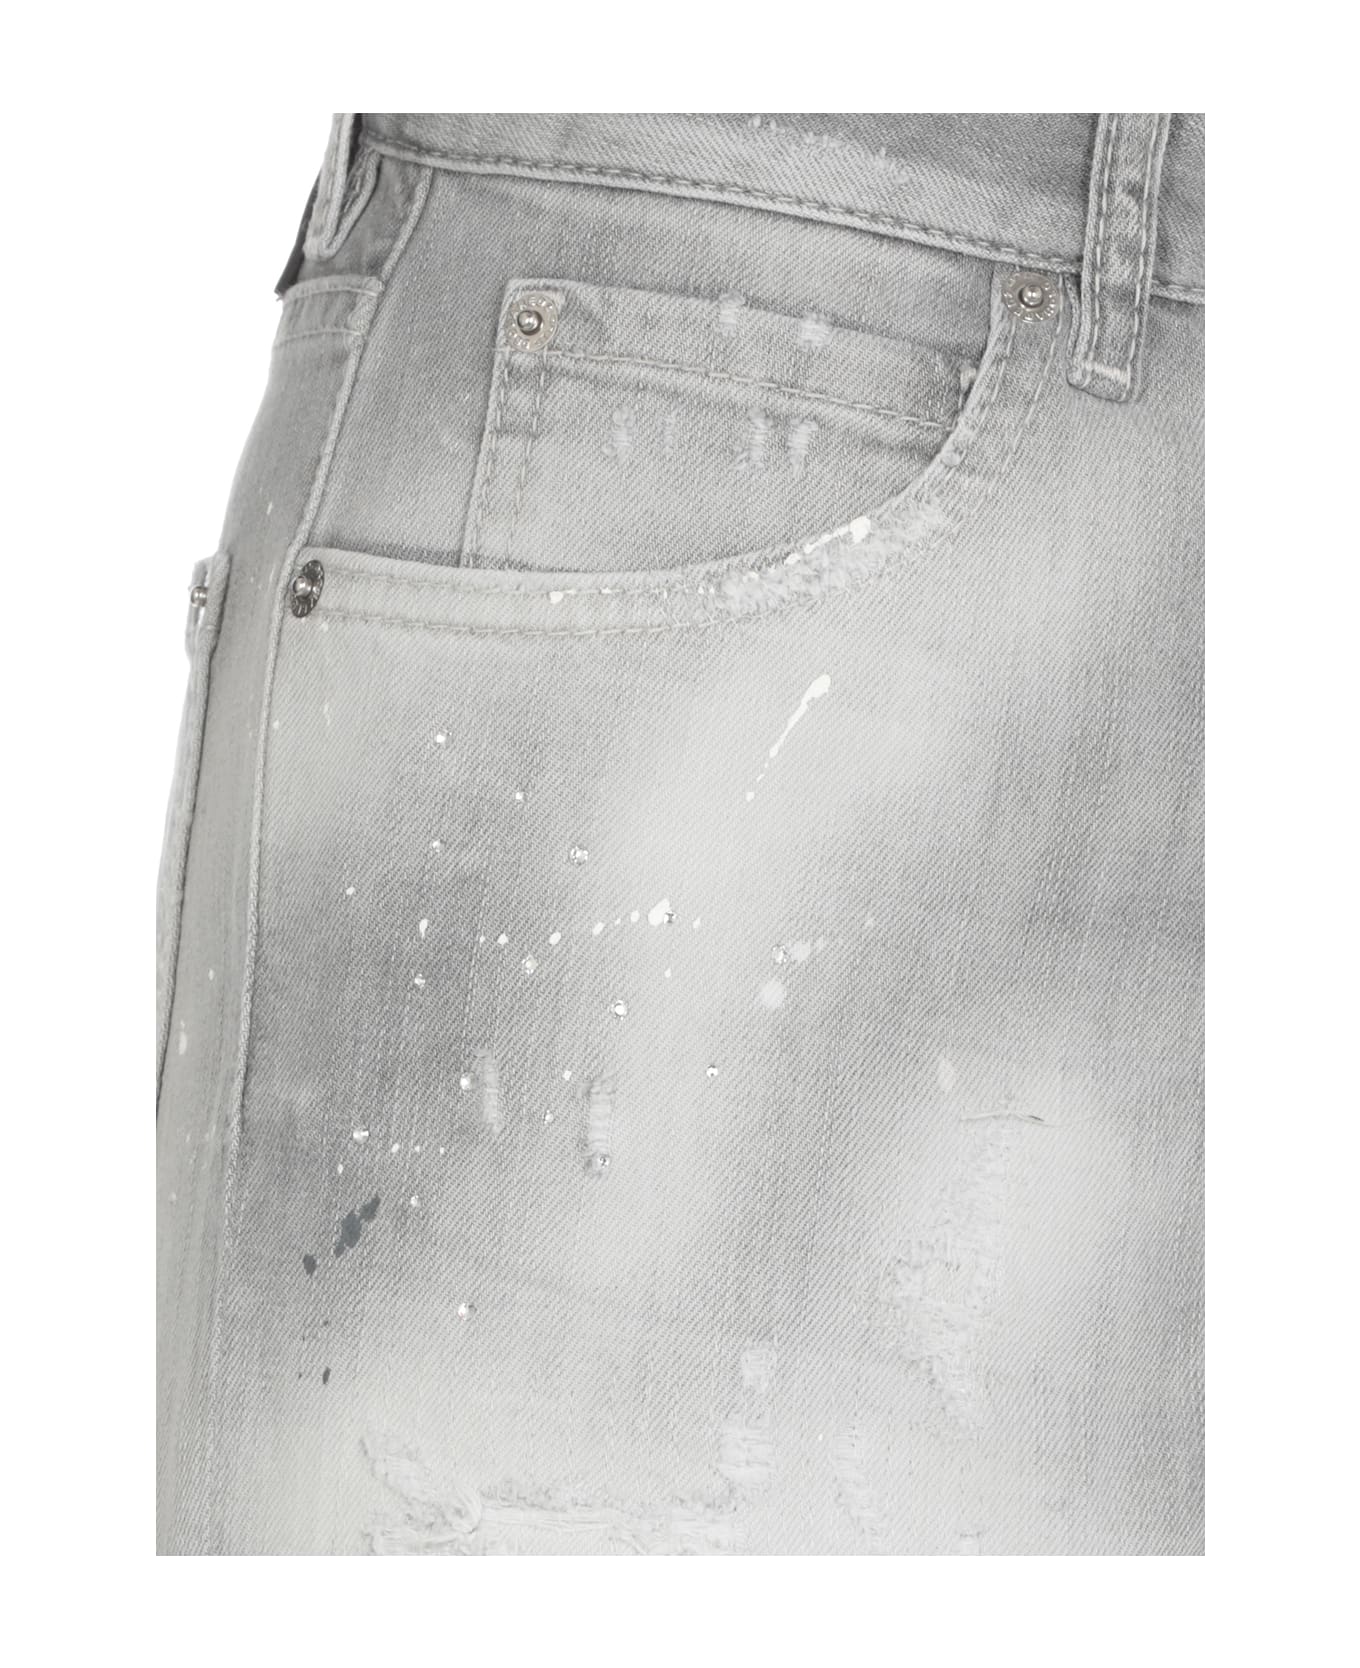 Dsquared2 Boston Jeans - Light grey